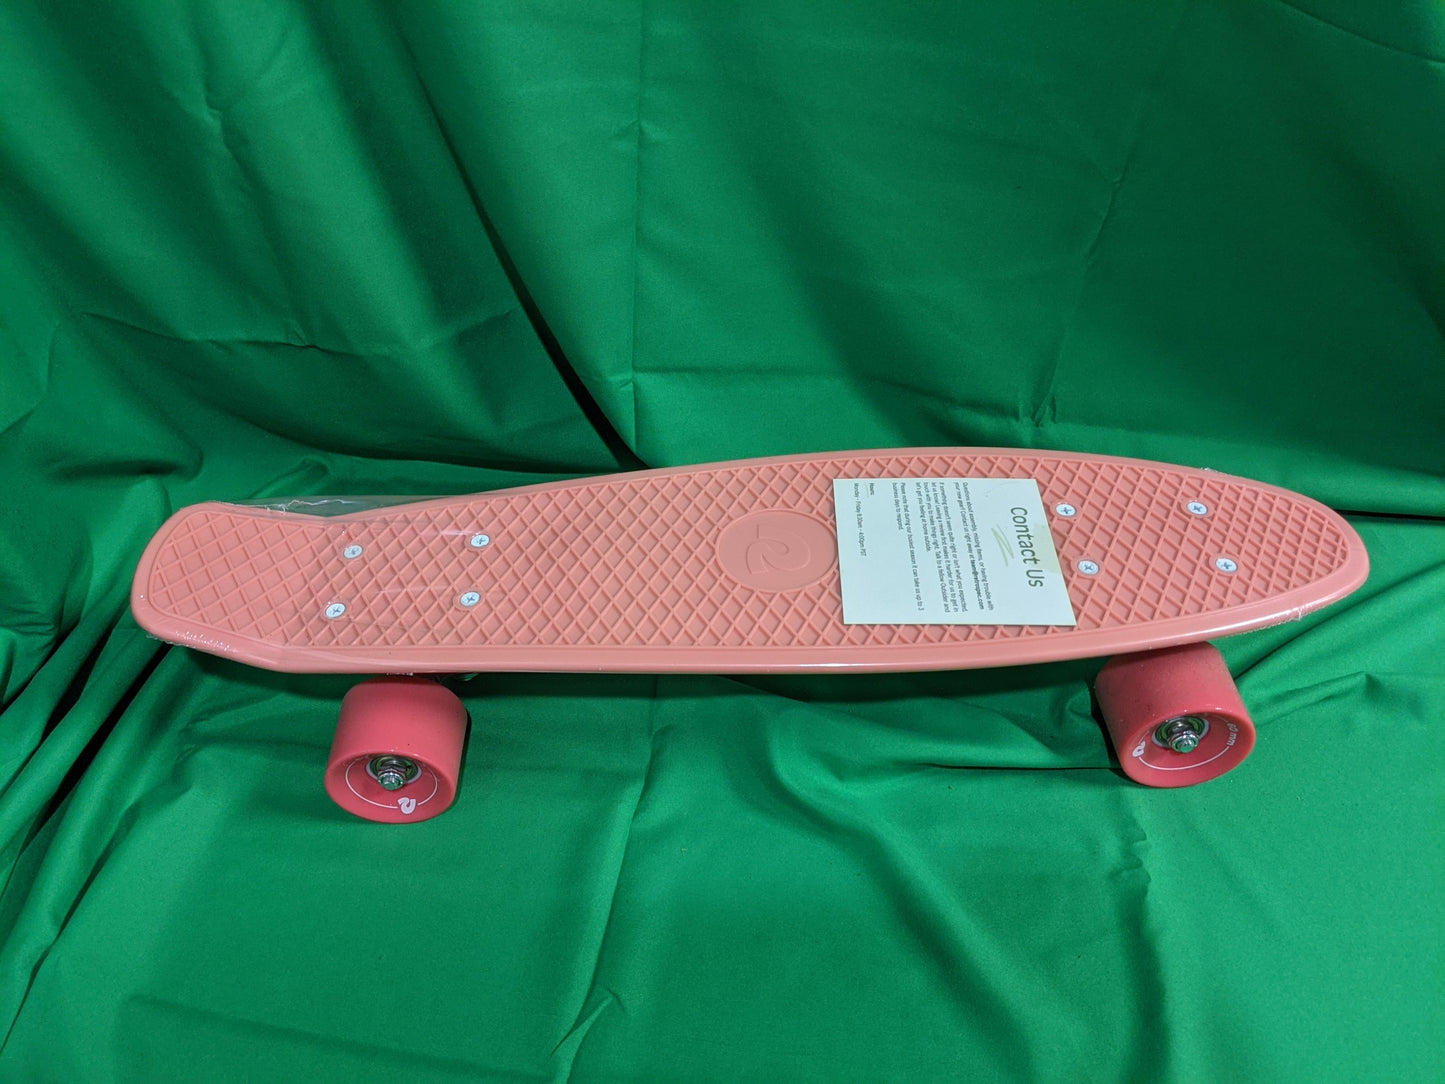 Retrospec Mini Cruiser Skateboard, Pink, Size: 22" NEW